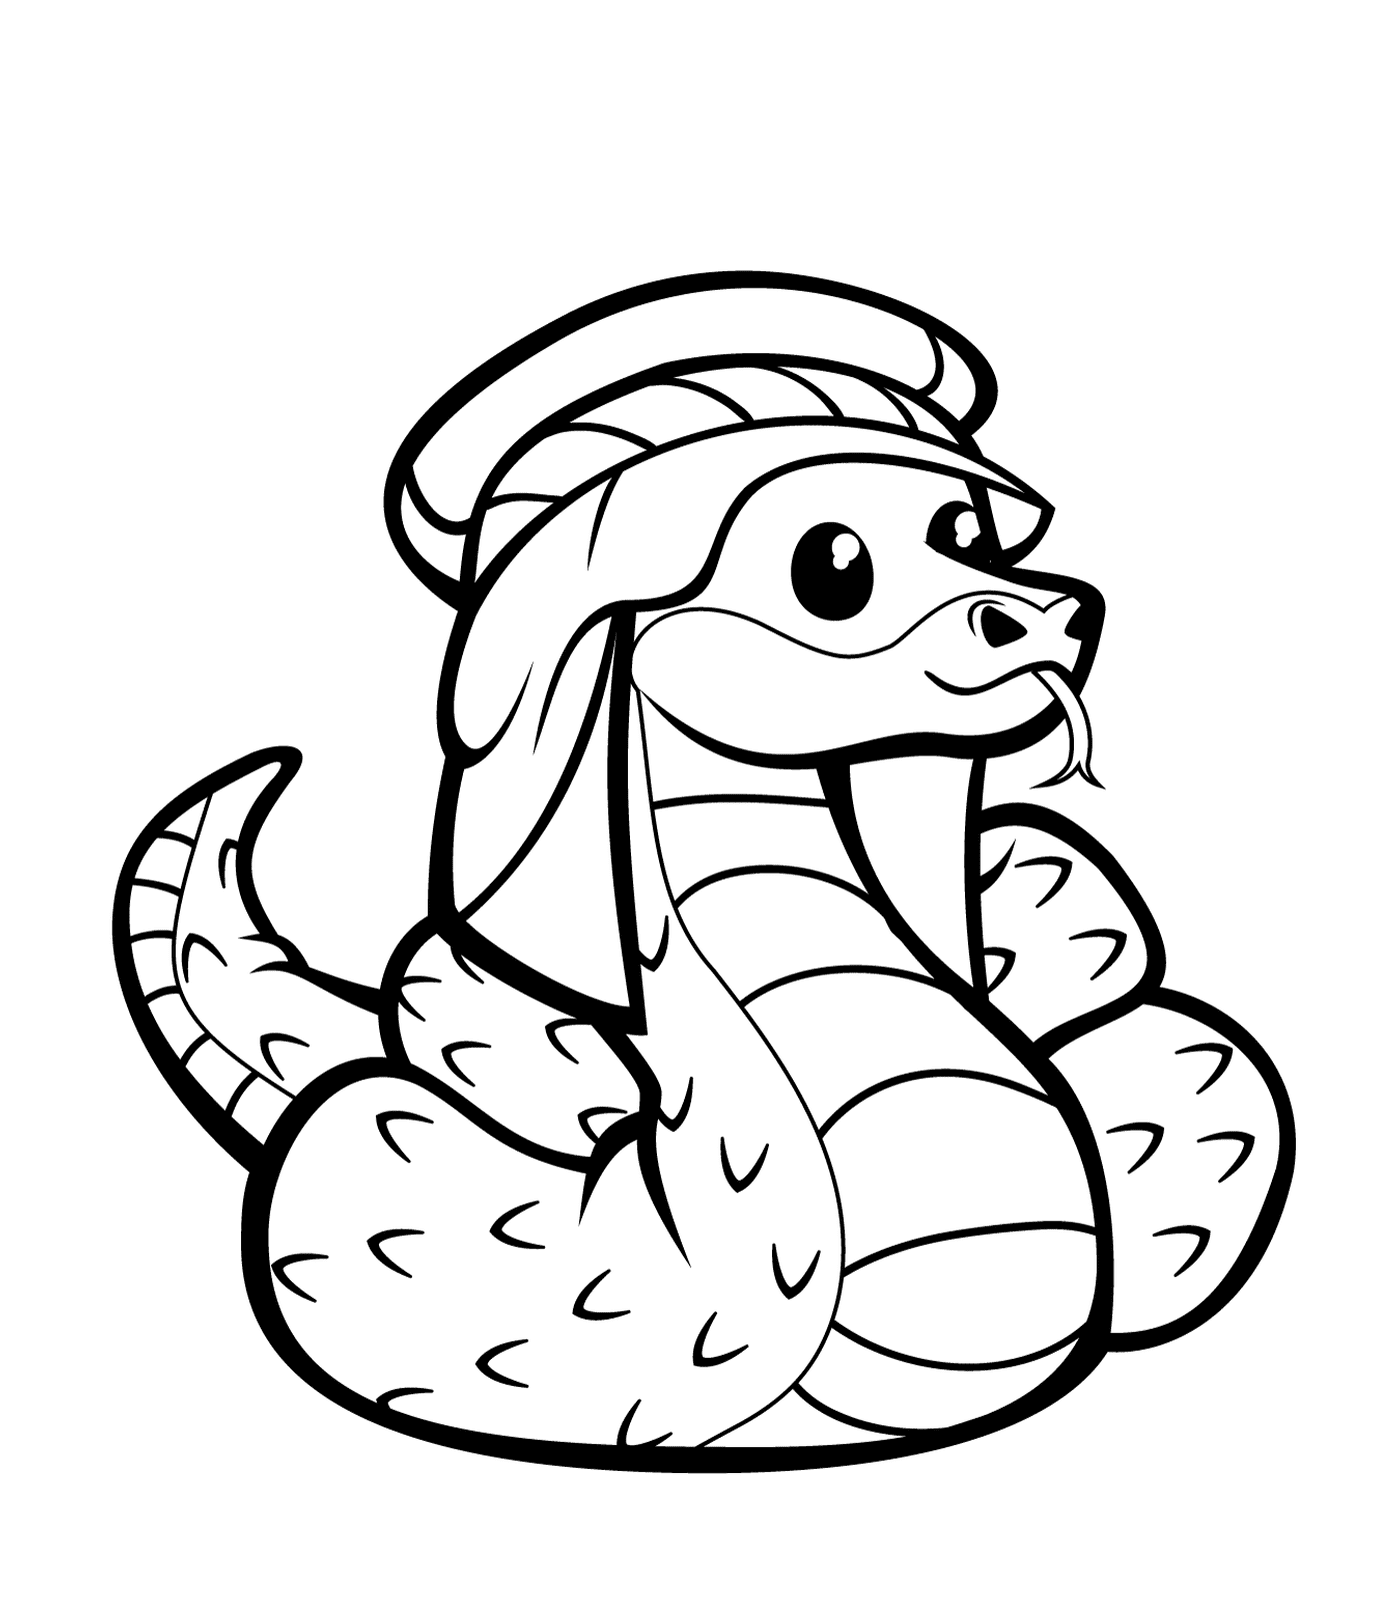  A snake wearing a hat 